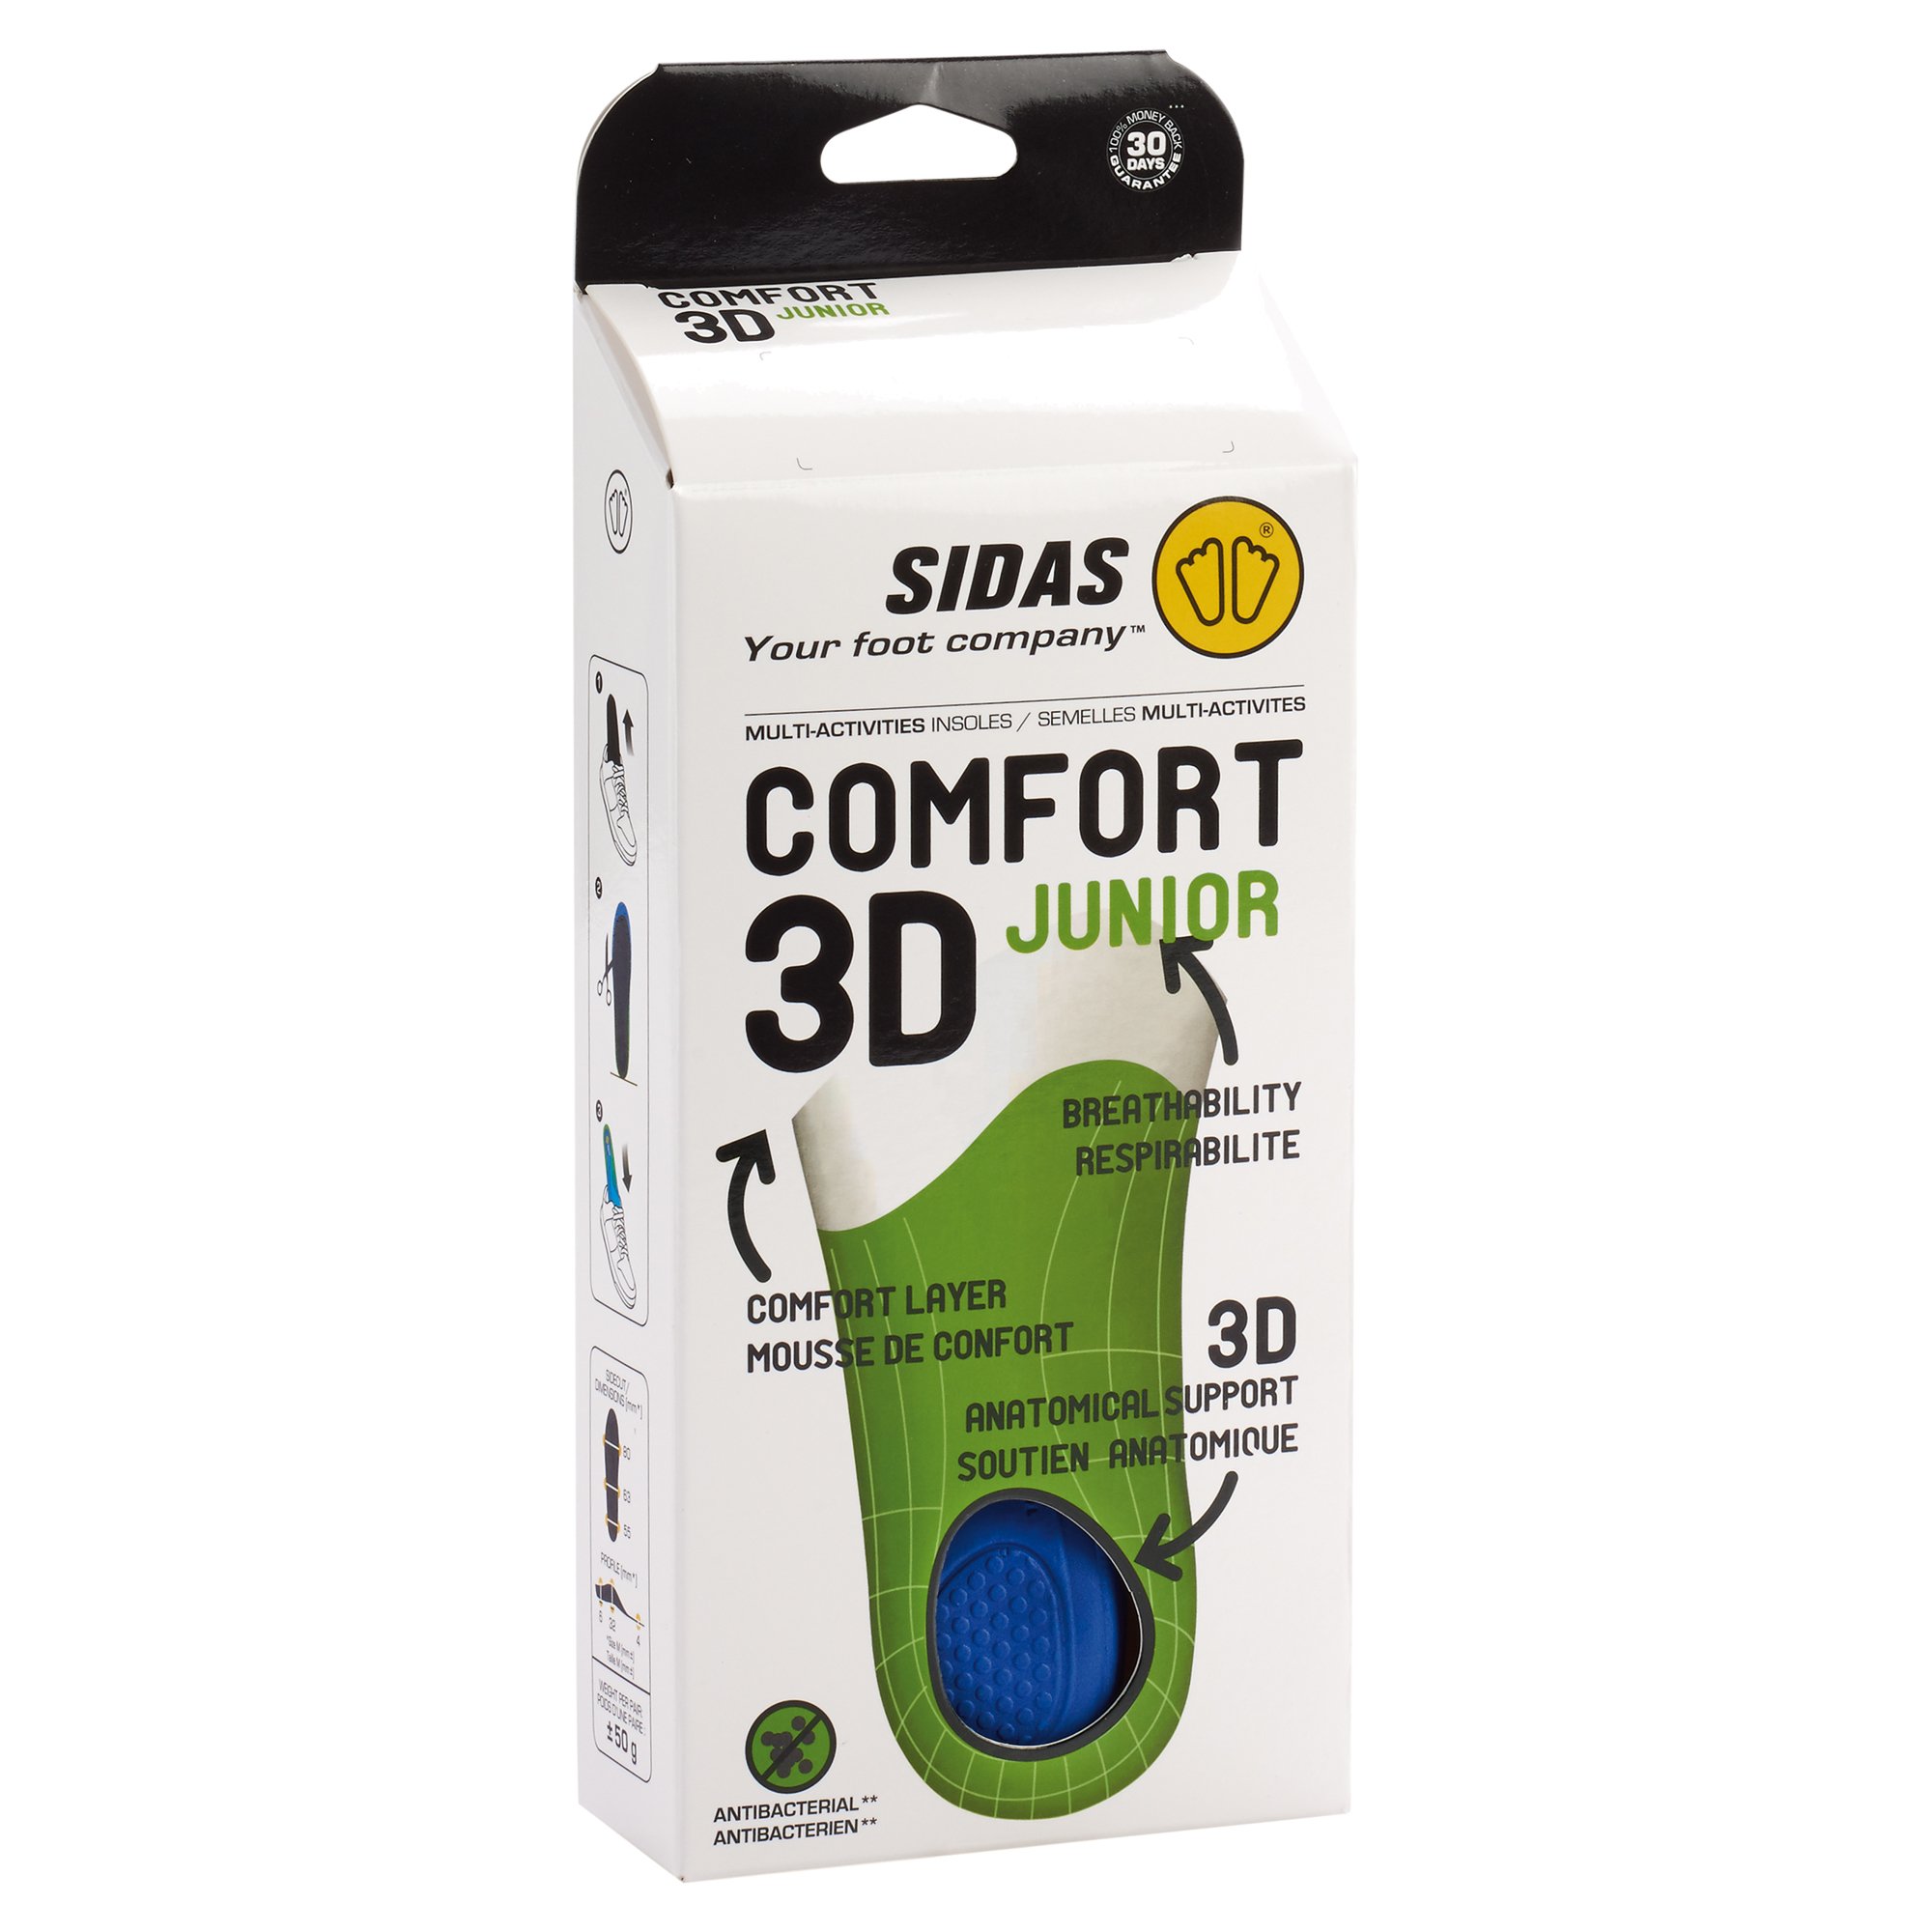 Sidas Comfort Junior 3D